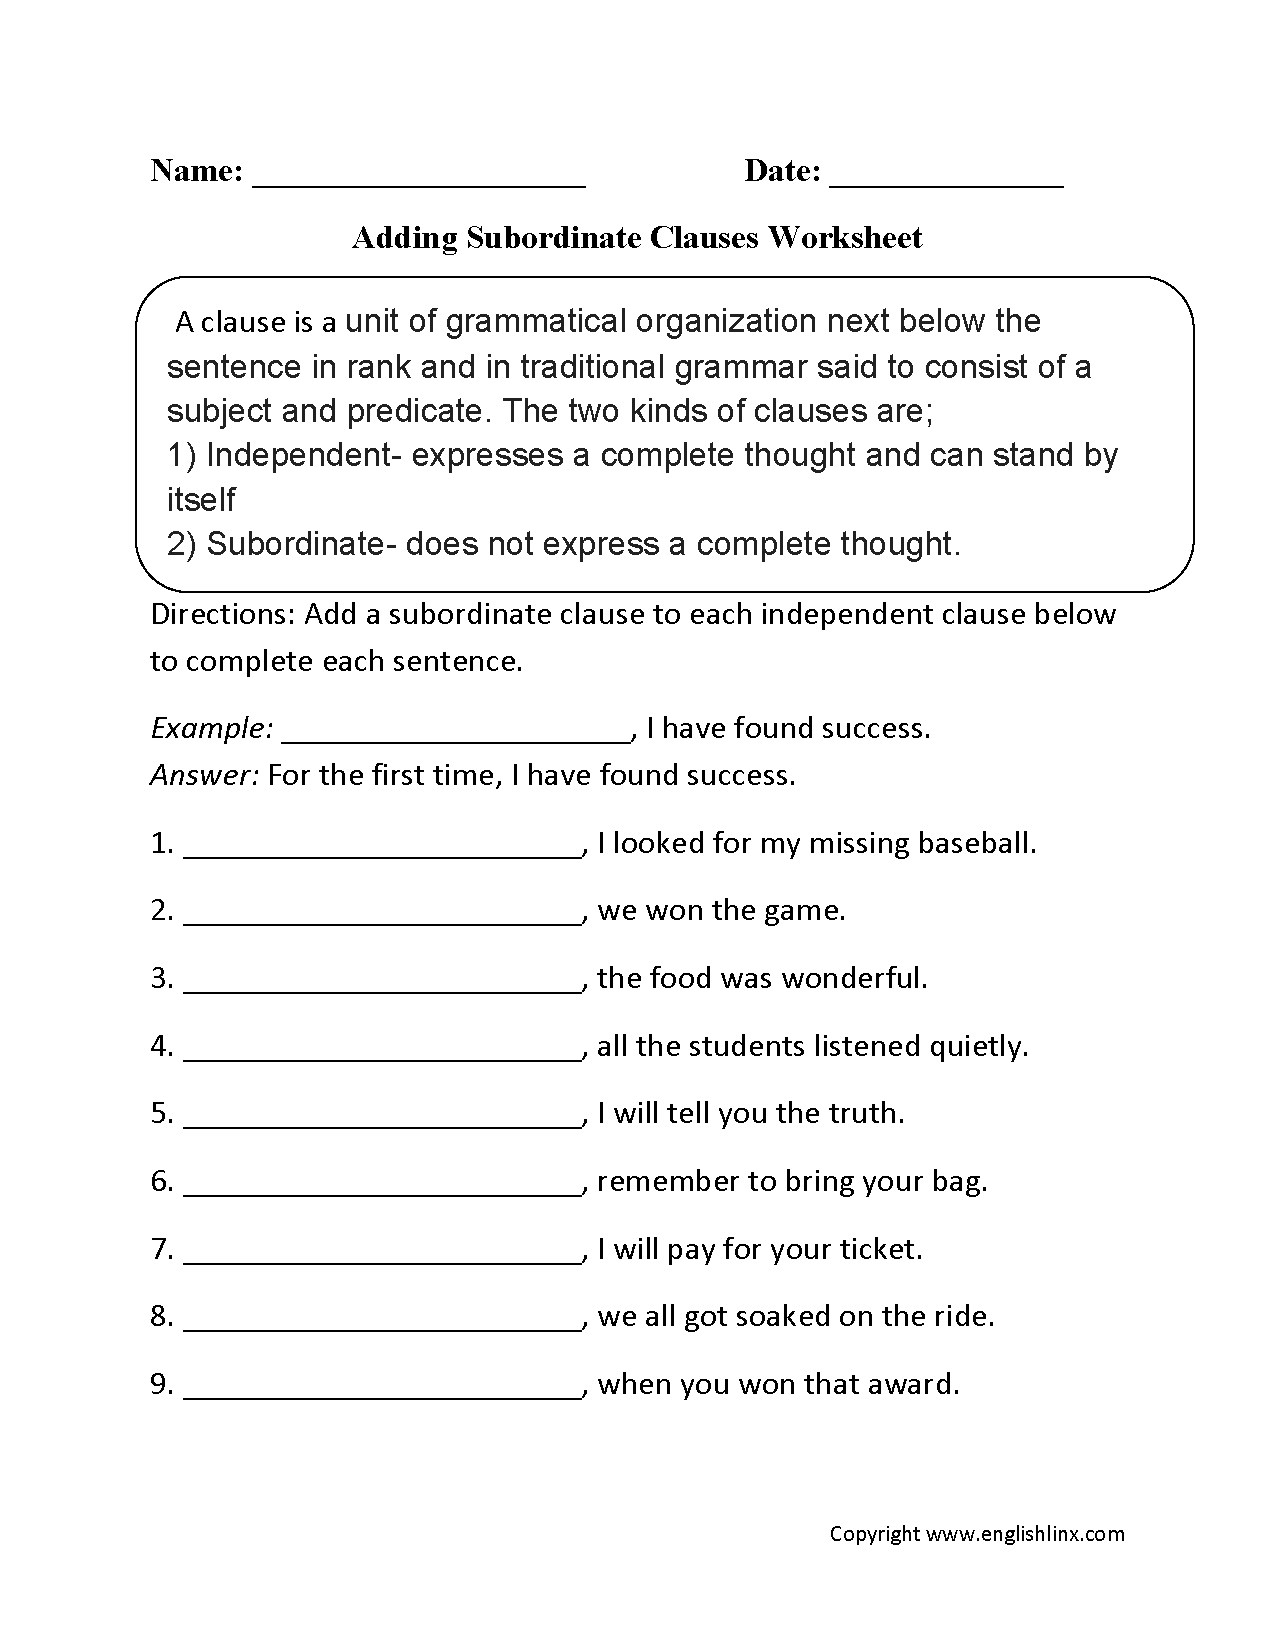 Adding Subordinate Clauses Worksheet | Englishlinx Board | Printable Grammar Worksheets For Middle School